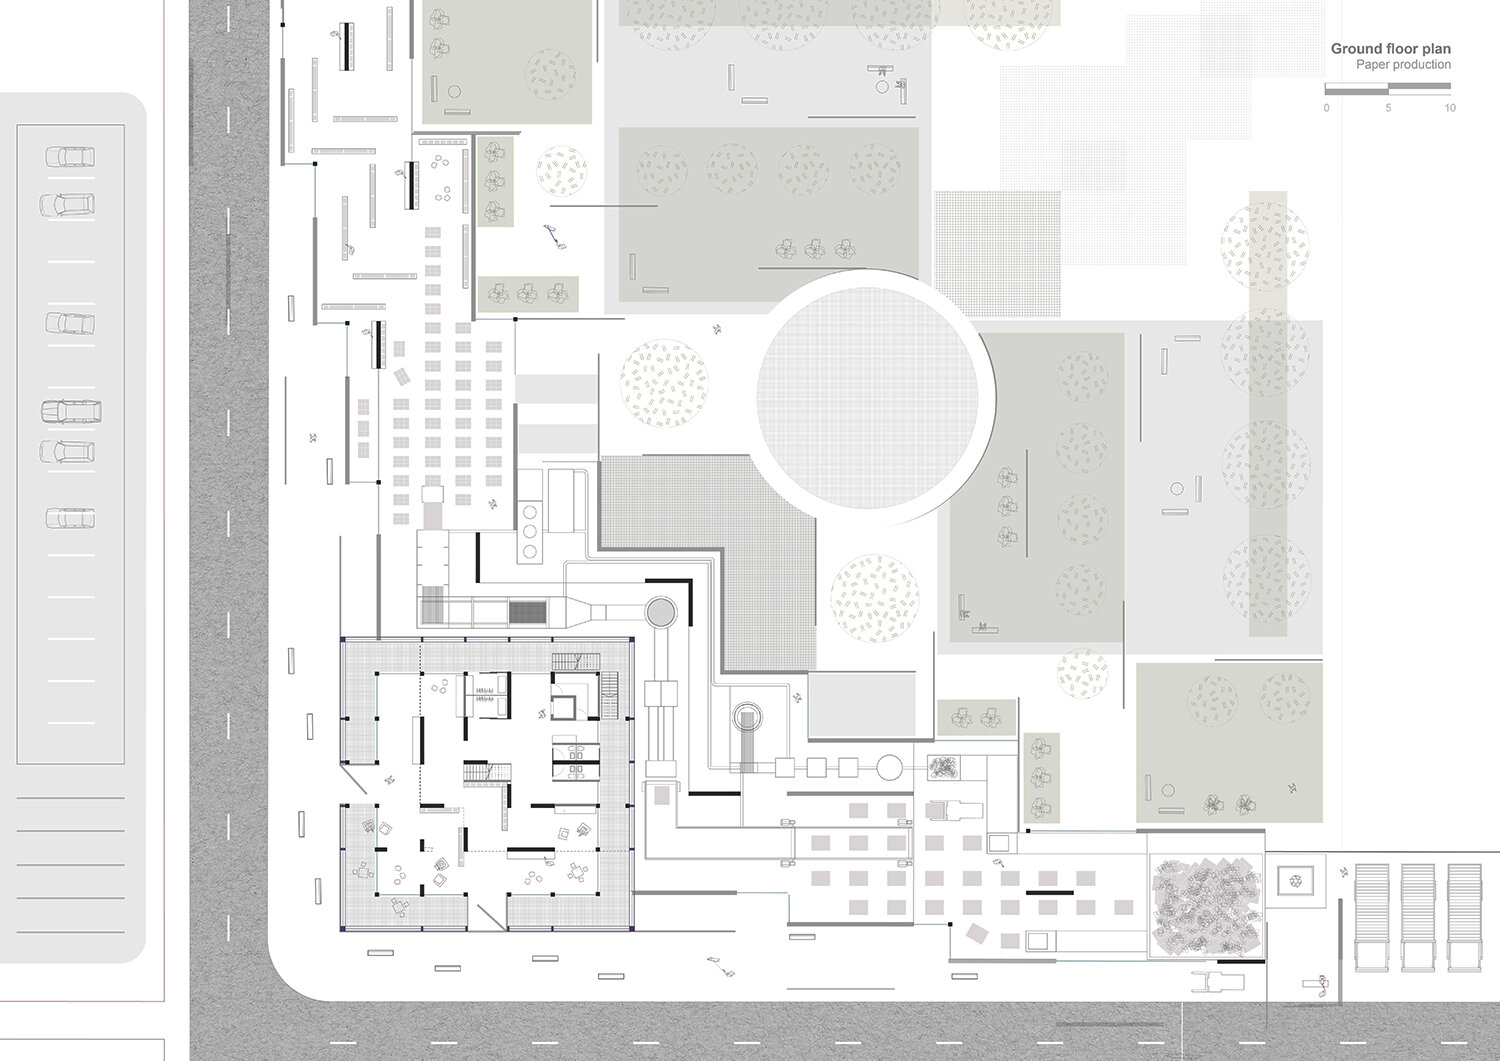 EAA-edinburgh-architecture-association-scotland-2020-J-R-McKay-Student Awards-Holly-Baker-Ground Floor Plan - Paper Production.jpg